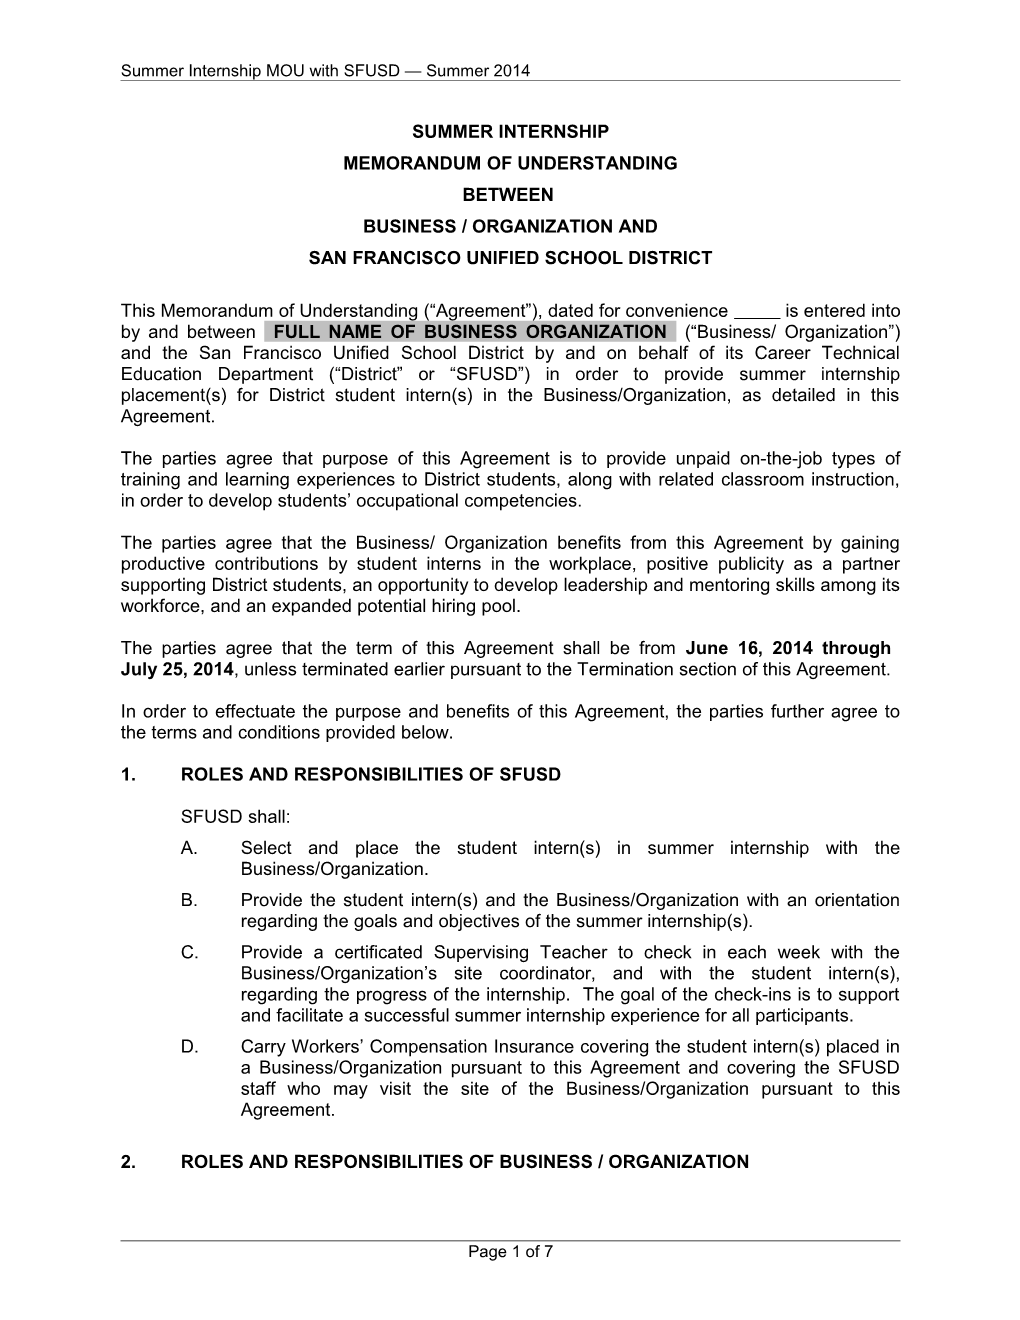 Memorandum of Understanding for Business/Organization Providing Summer Internship Opportunities